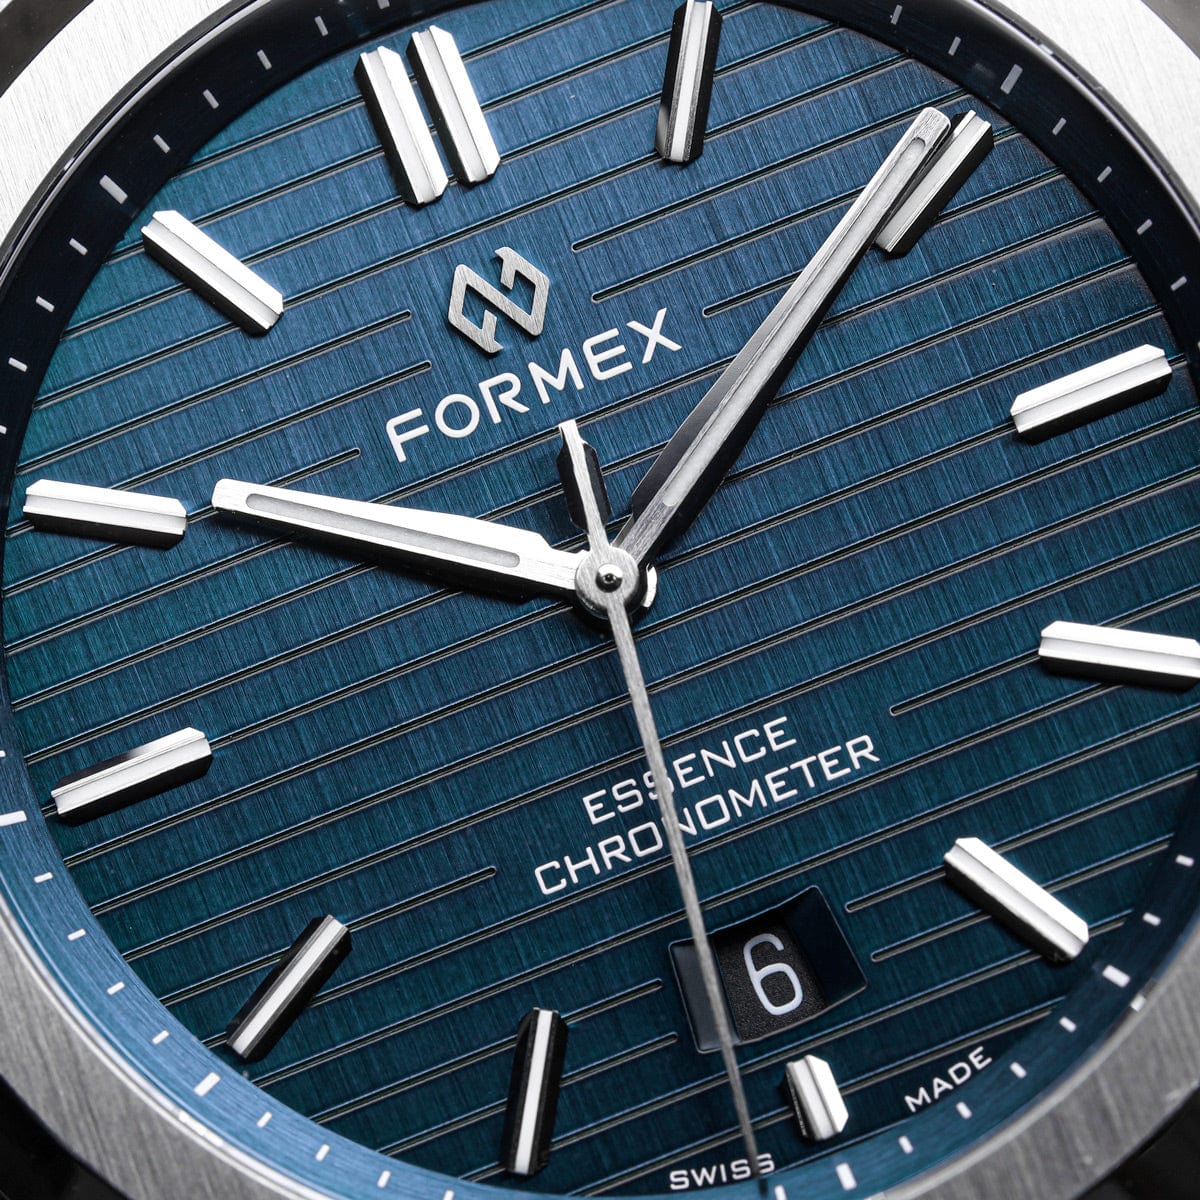 Formex Essence 43 Automatic Chronometer - Blue